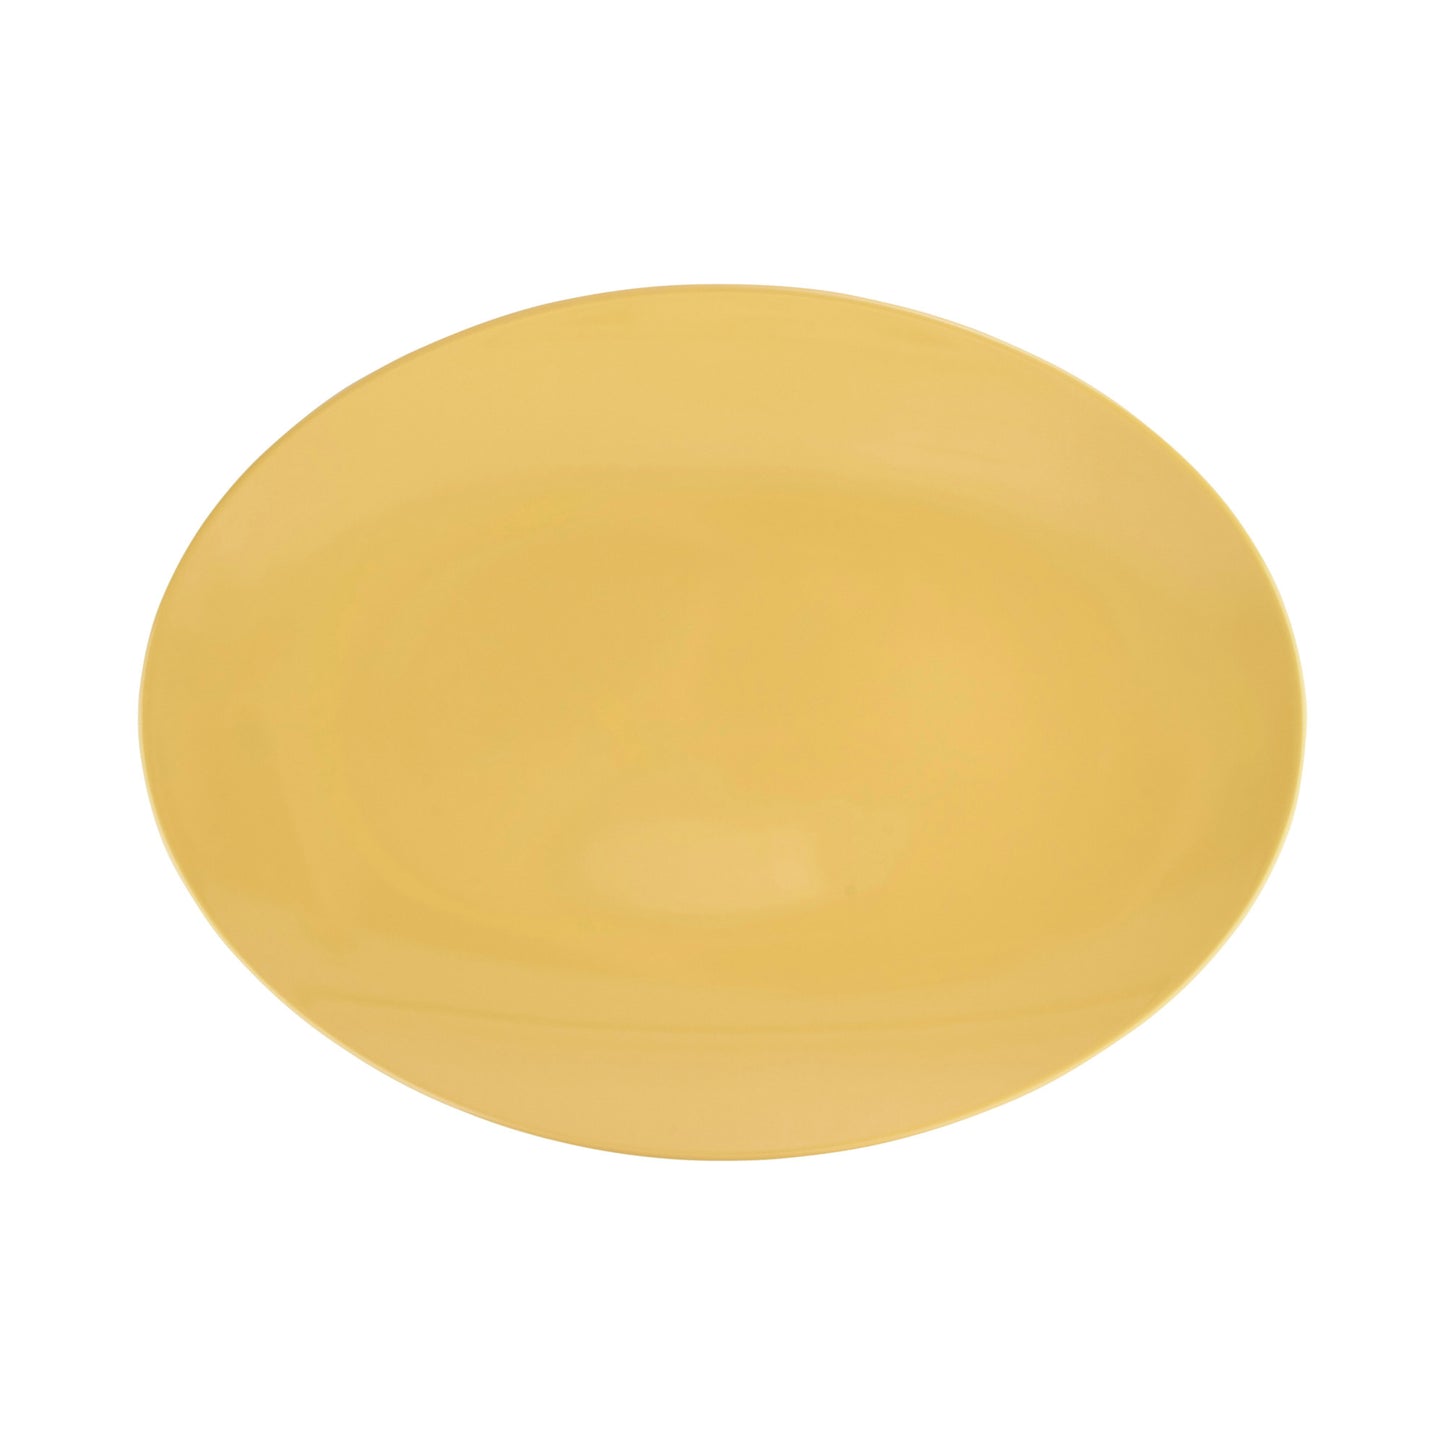 18" x 13" Oval Platter